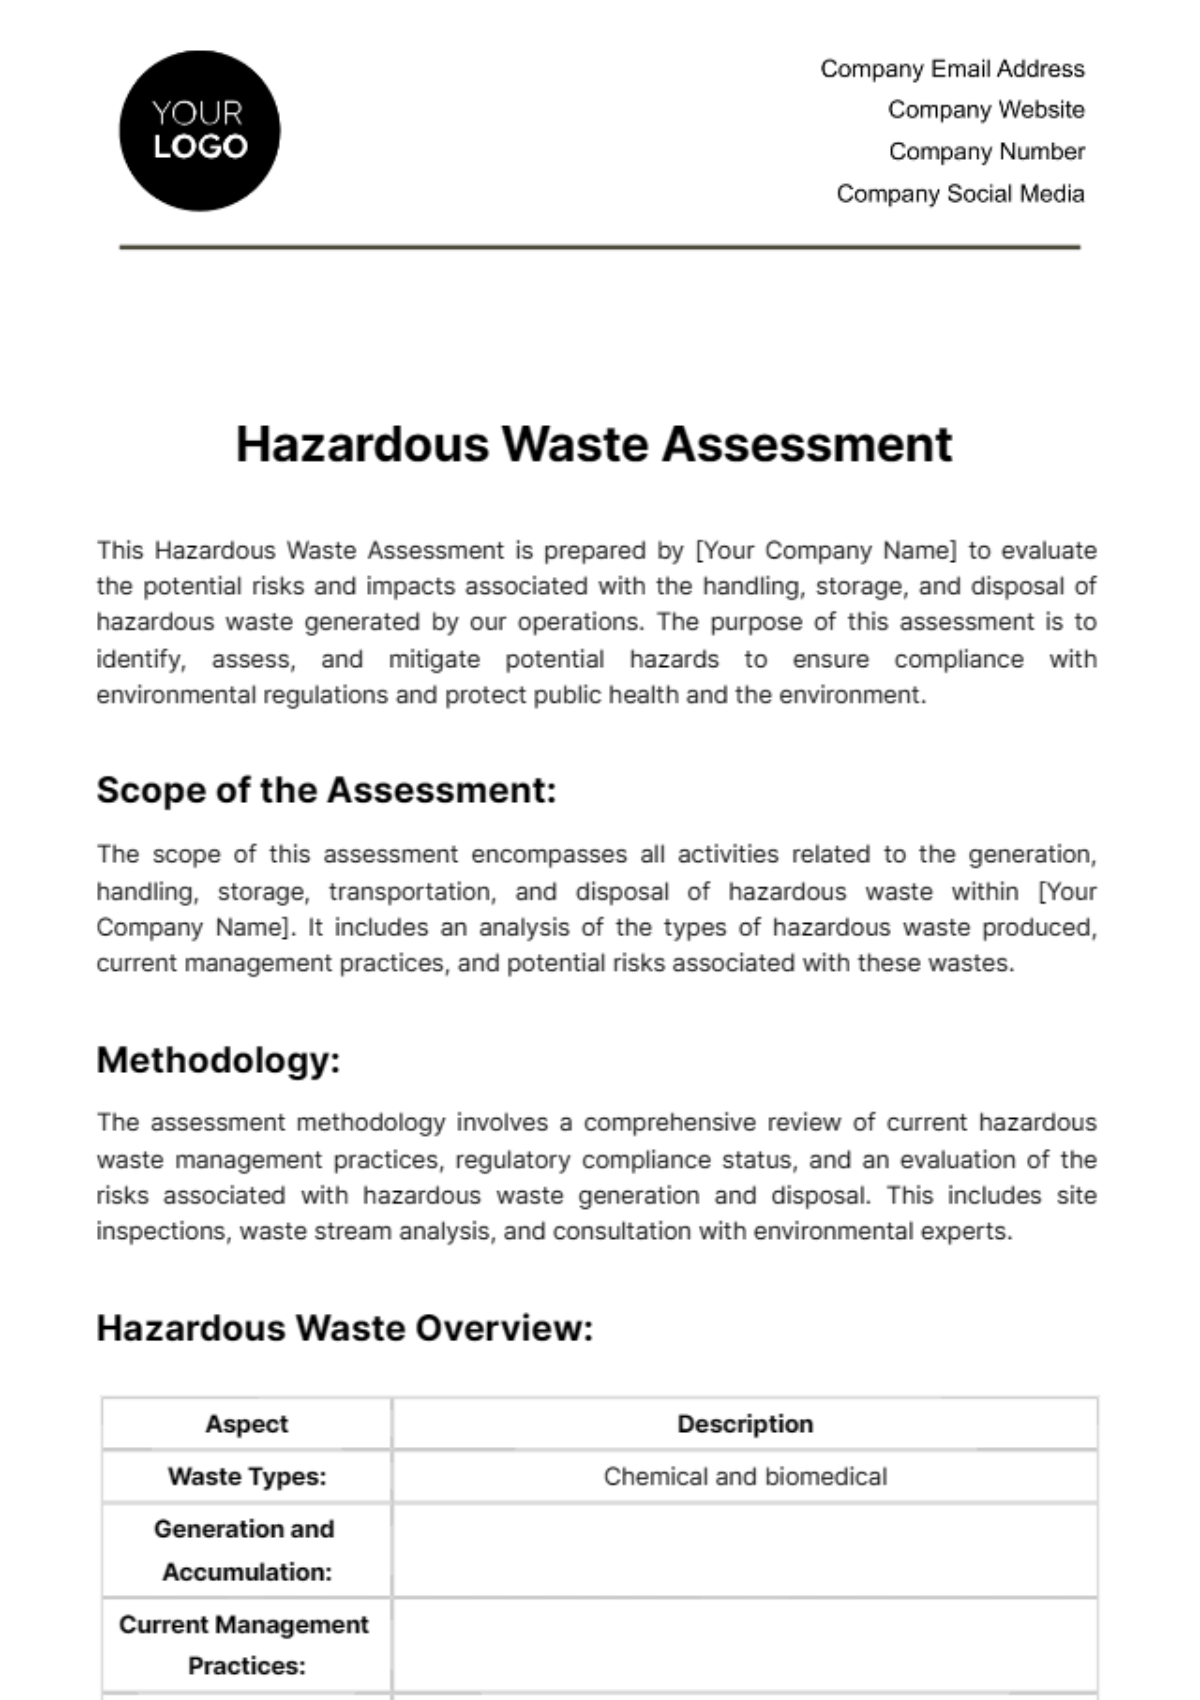 Free Hazardous Waste Assessment Template